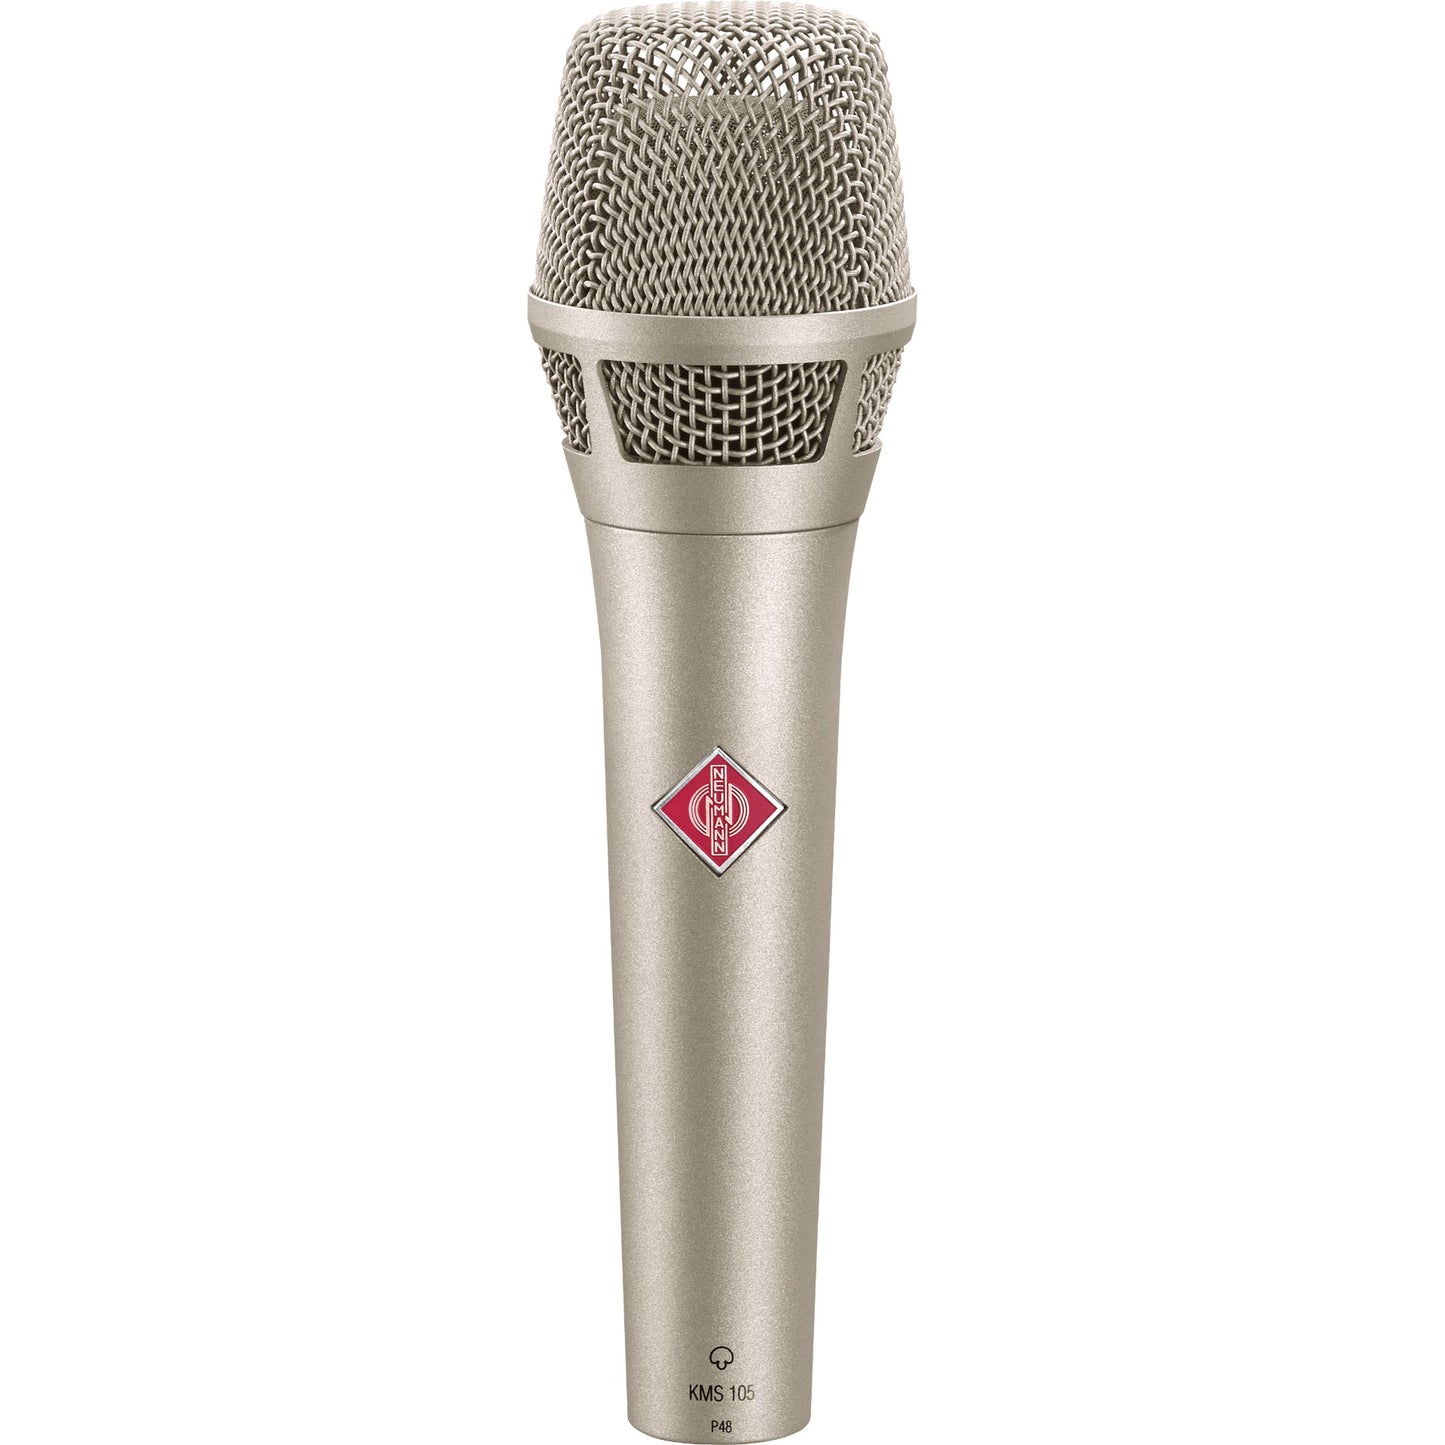 Neumann Kms105 Supercardioid Vocal Condenser Microphone In Nickel